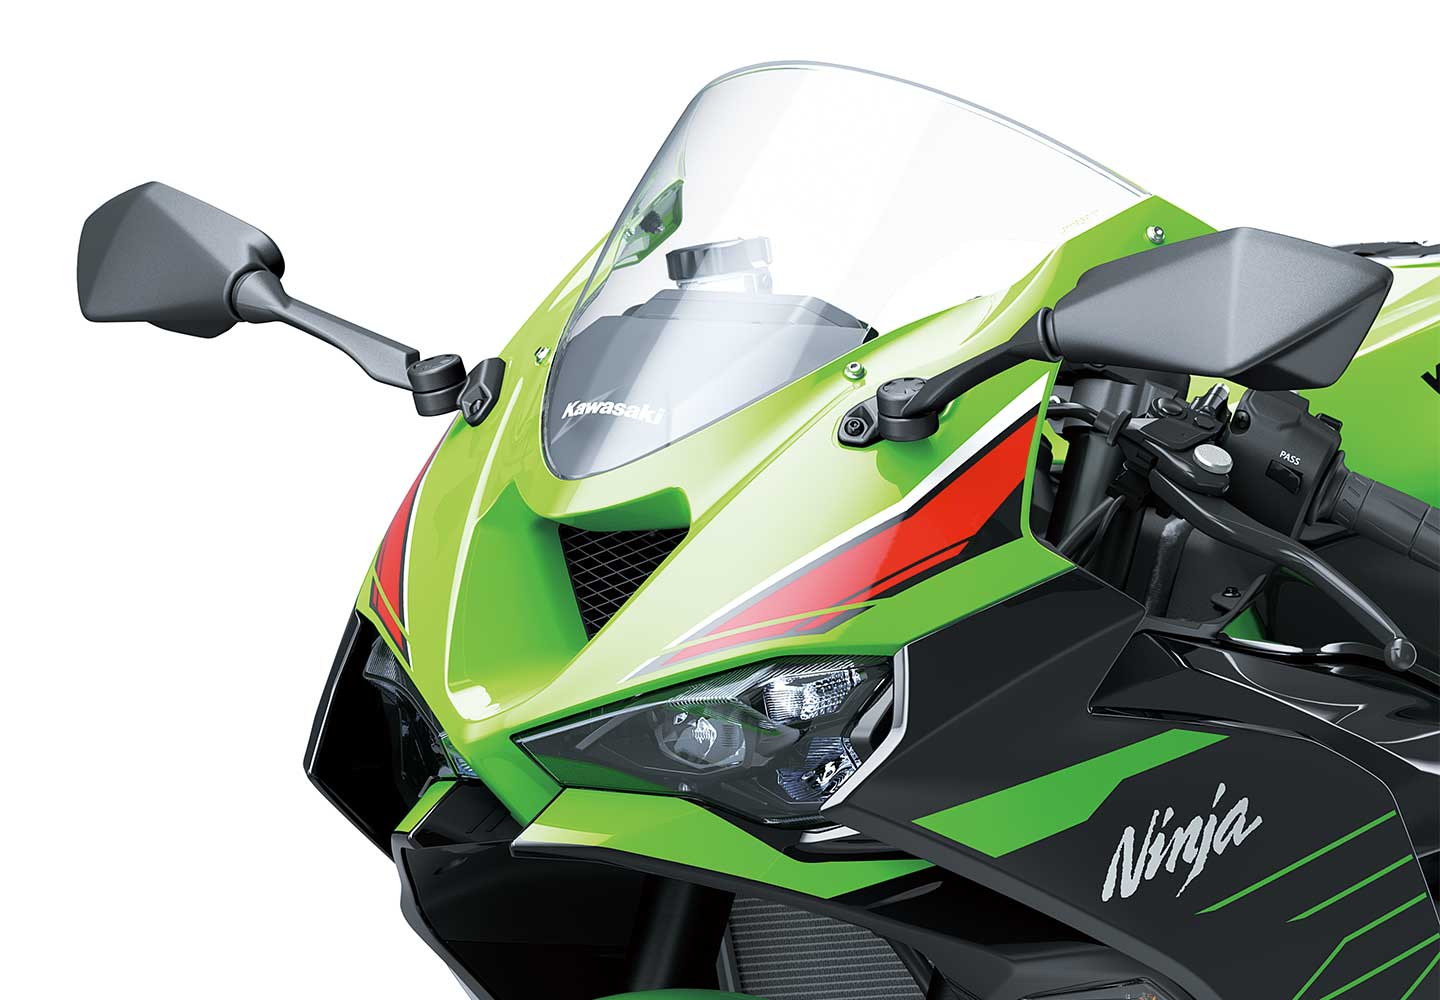 Kawasaki Ninja ZX-6R | Street or Track Supersport Motorcycle